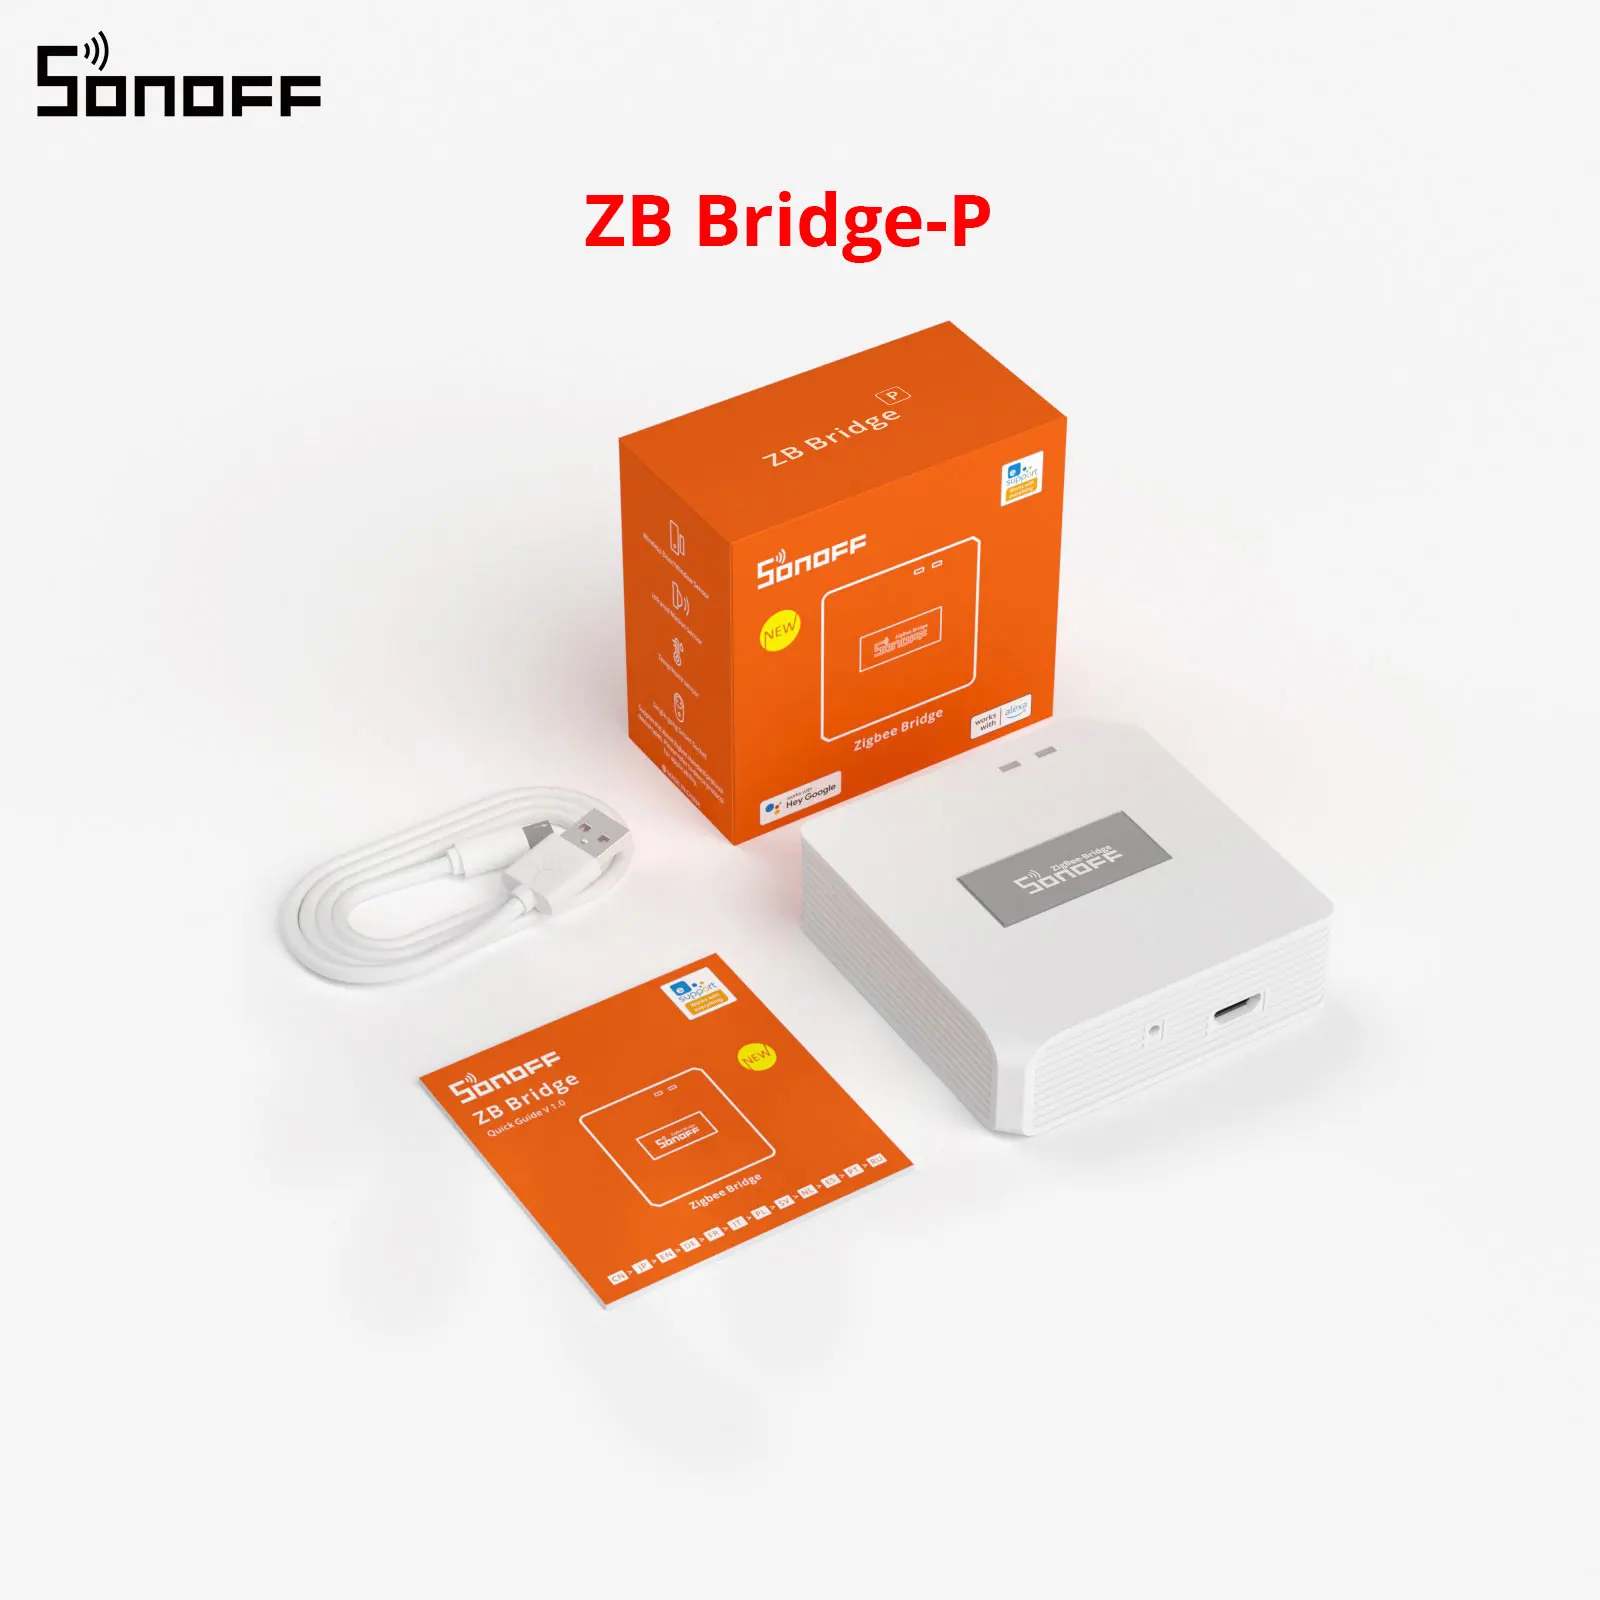 SONOFF Zigbee Temperature and Humidity Sensor (SNZB-02D)